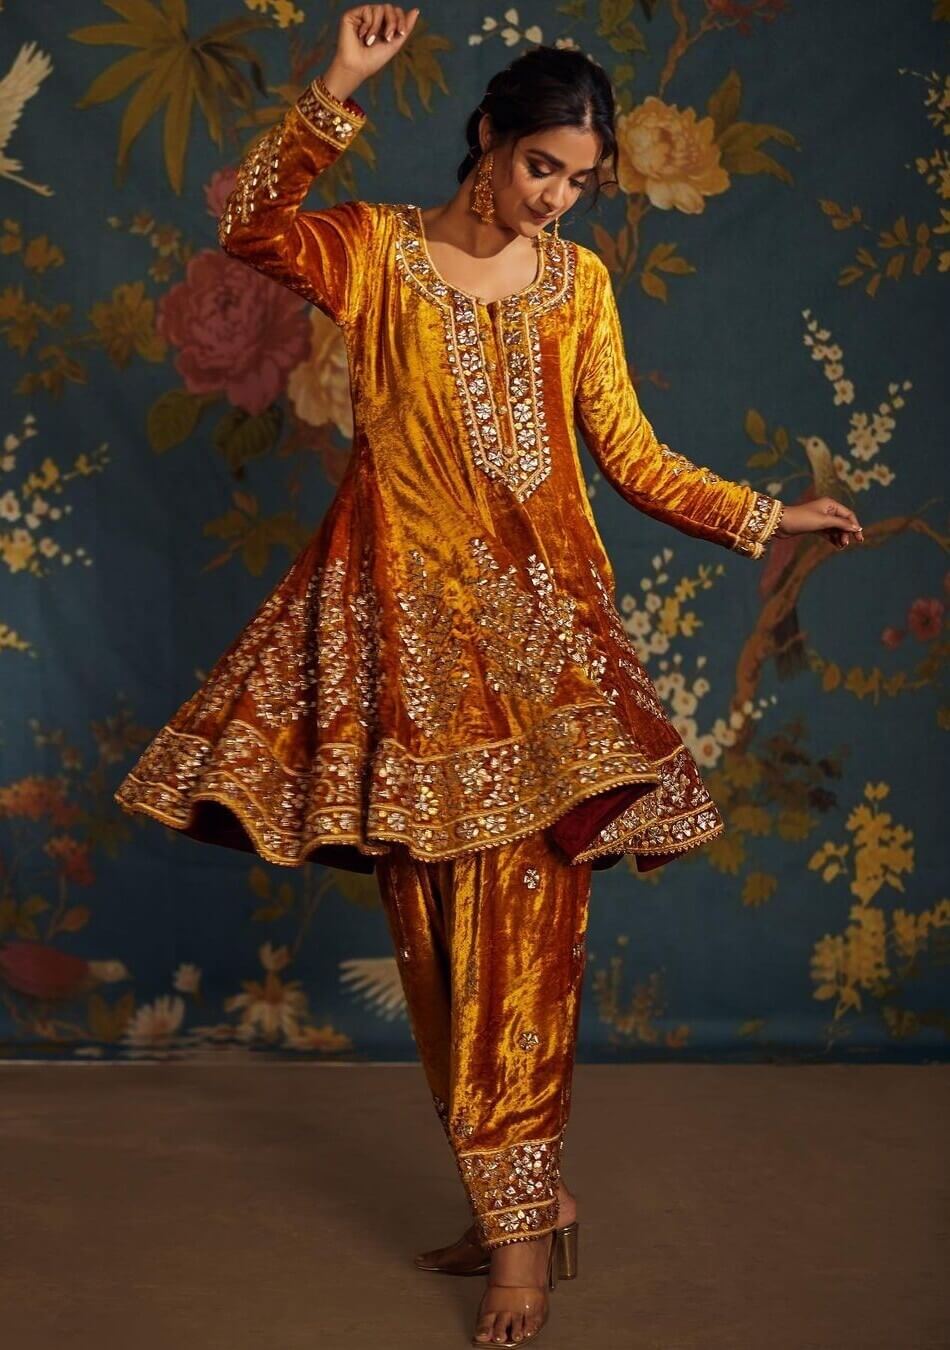 Keerthy Suresh's Fabulous Look In Traditional Dress